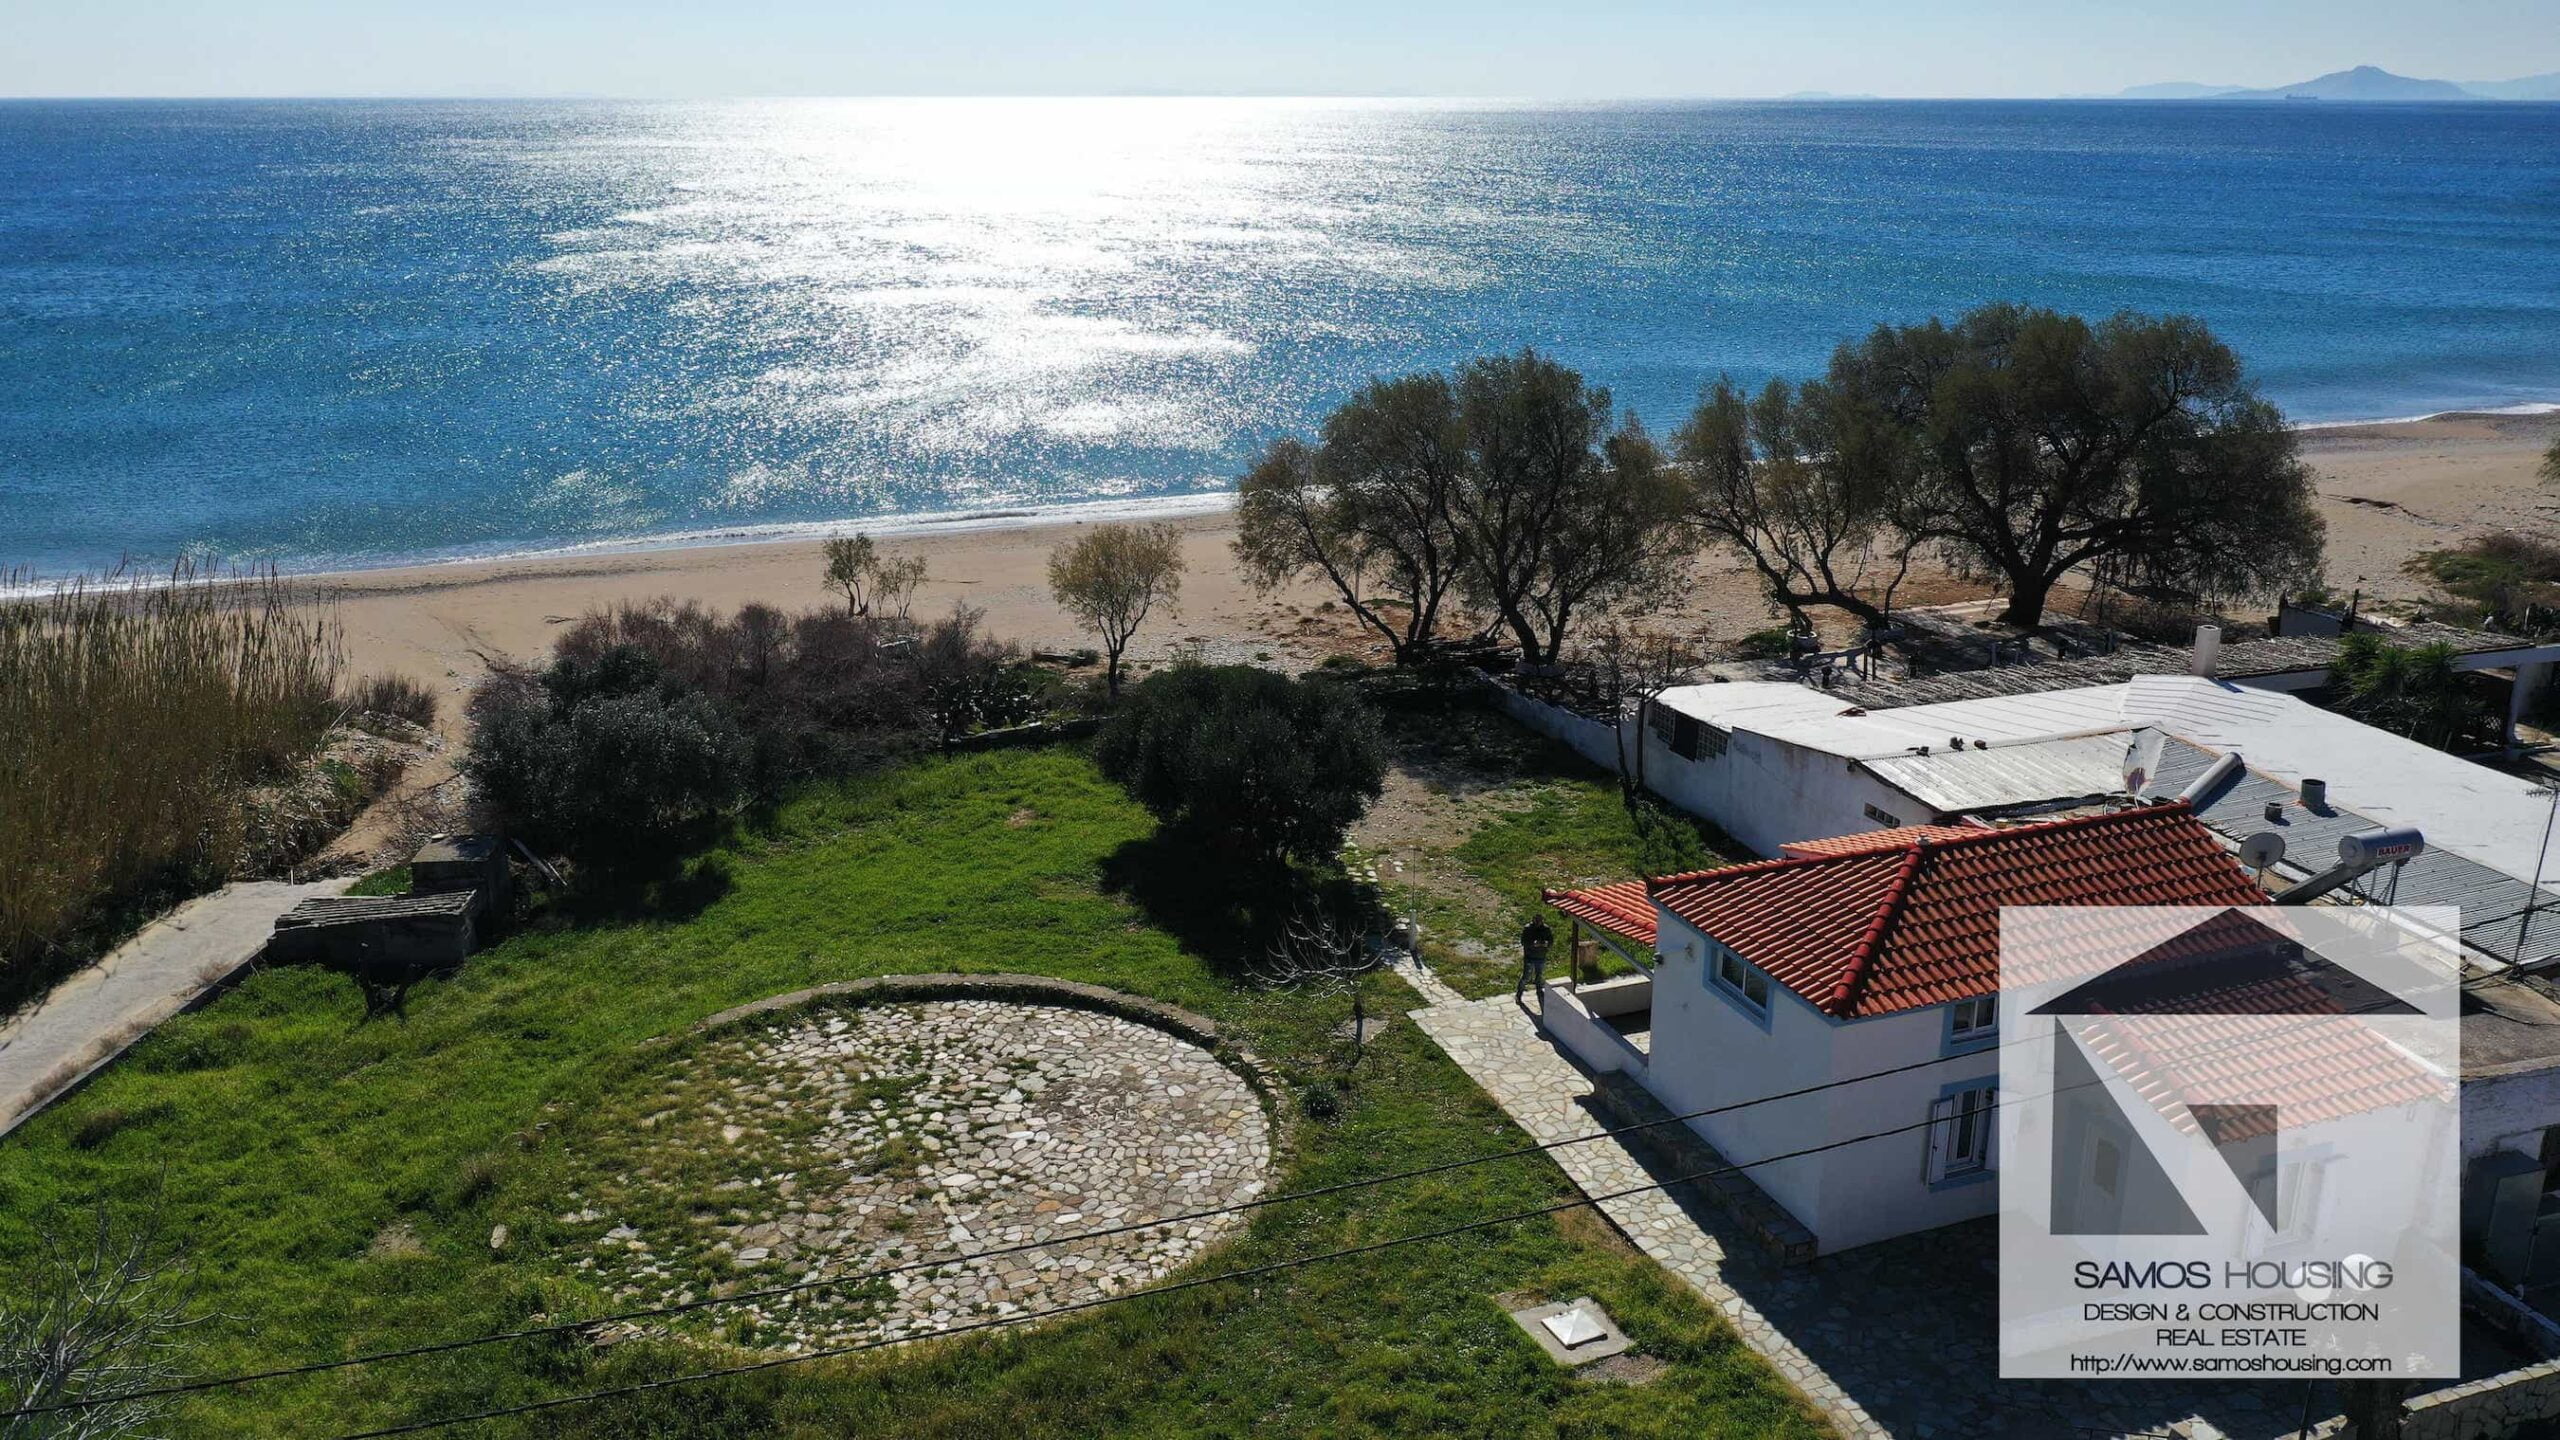 SH334 Καλυψώ παραλία εξοχικό σπίτι Ελλάδα - image SH334-Calypso-Beach-Cottage-Greece29-scaled on https://www.samoshousing.com